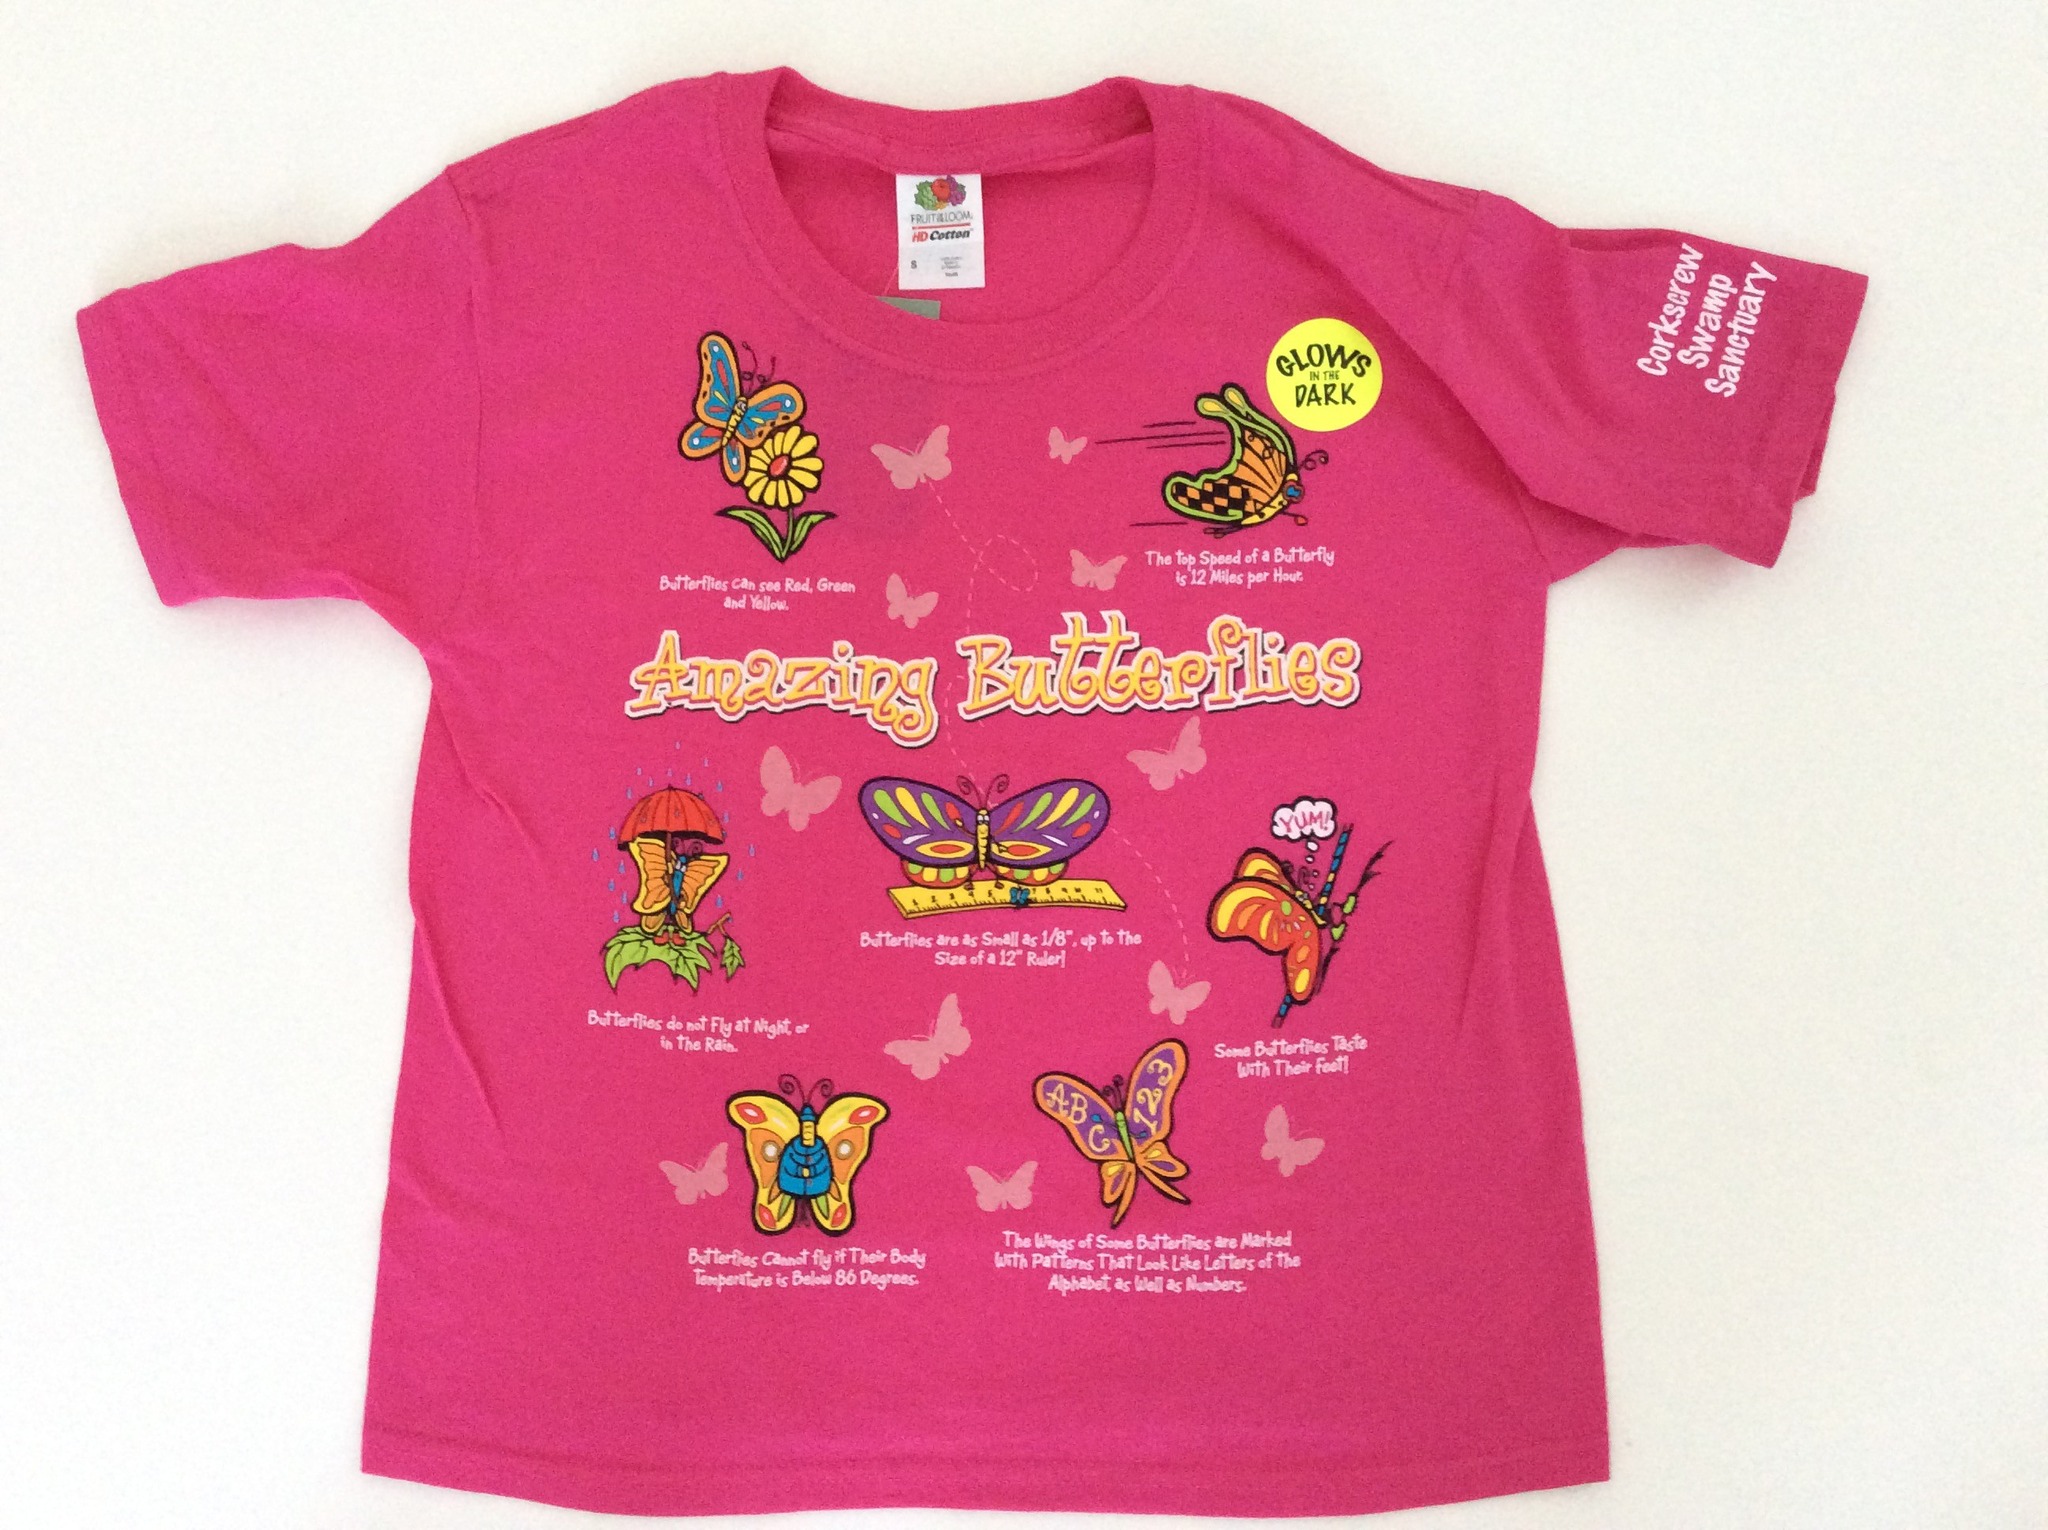 Pink child's t-shirt